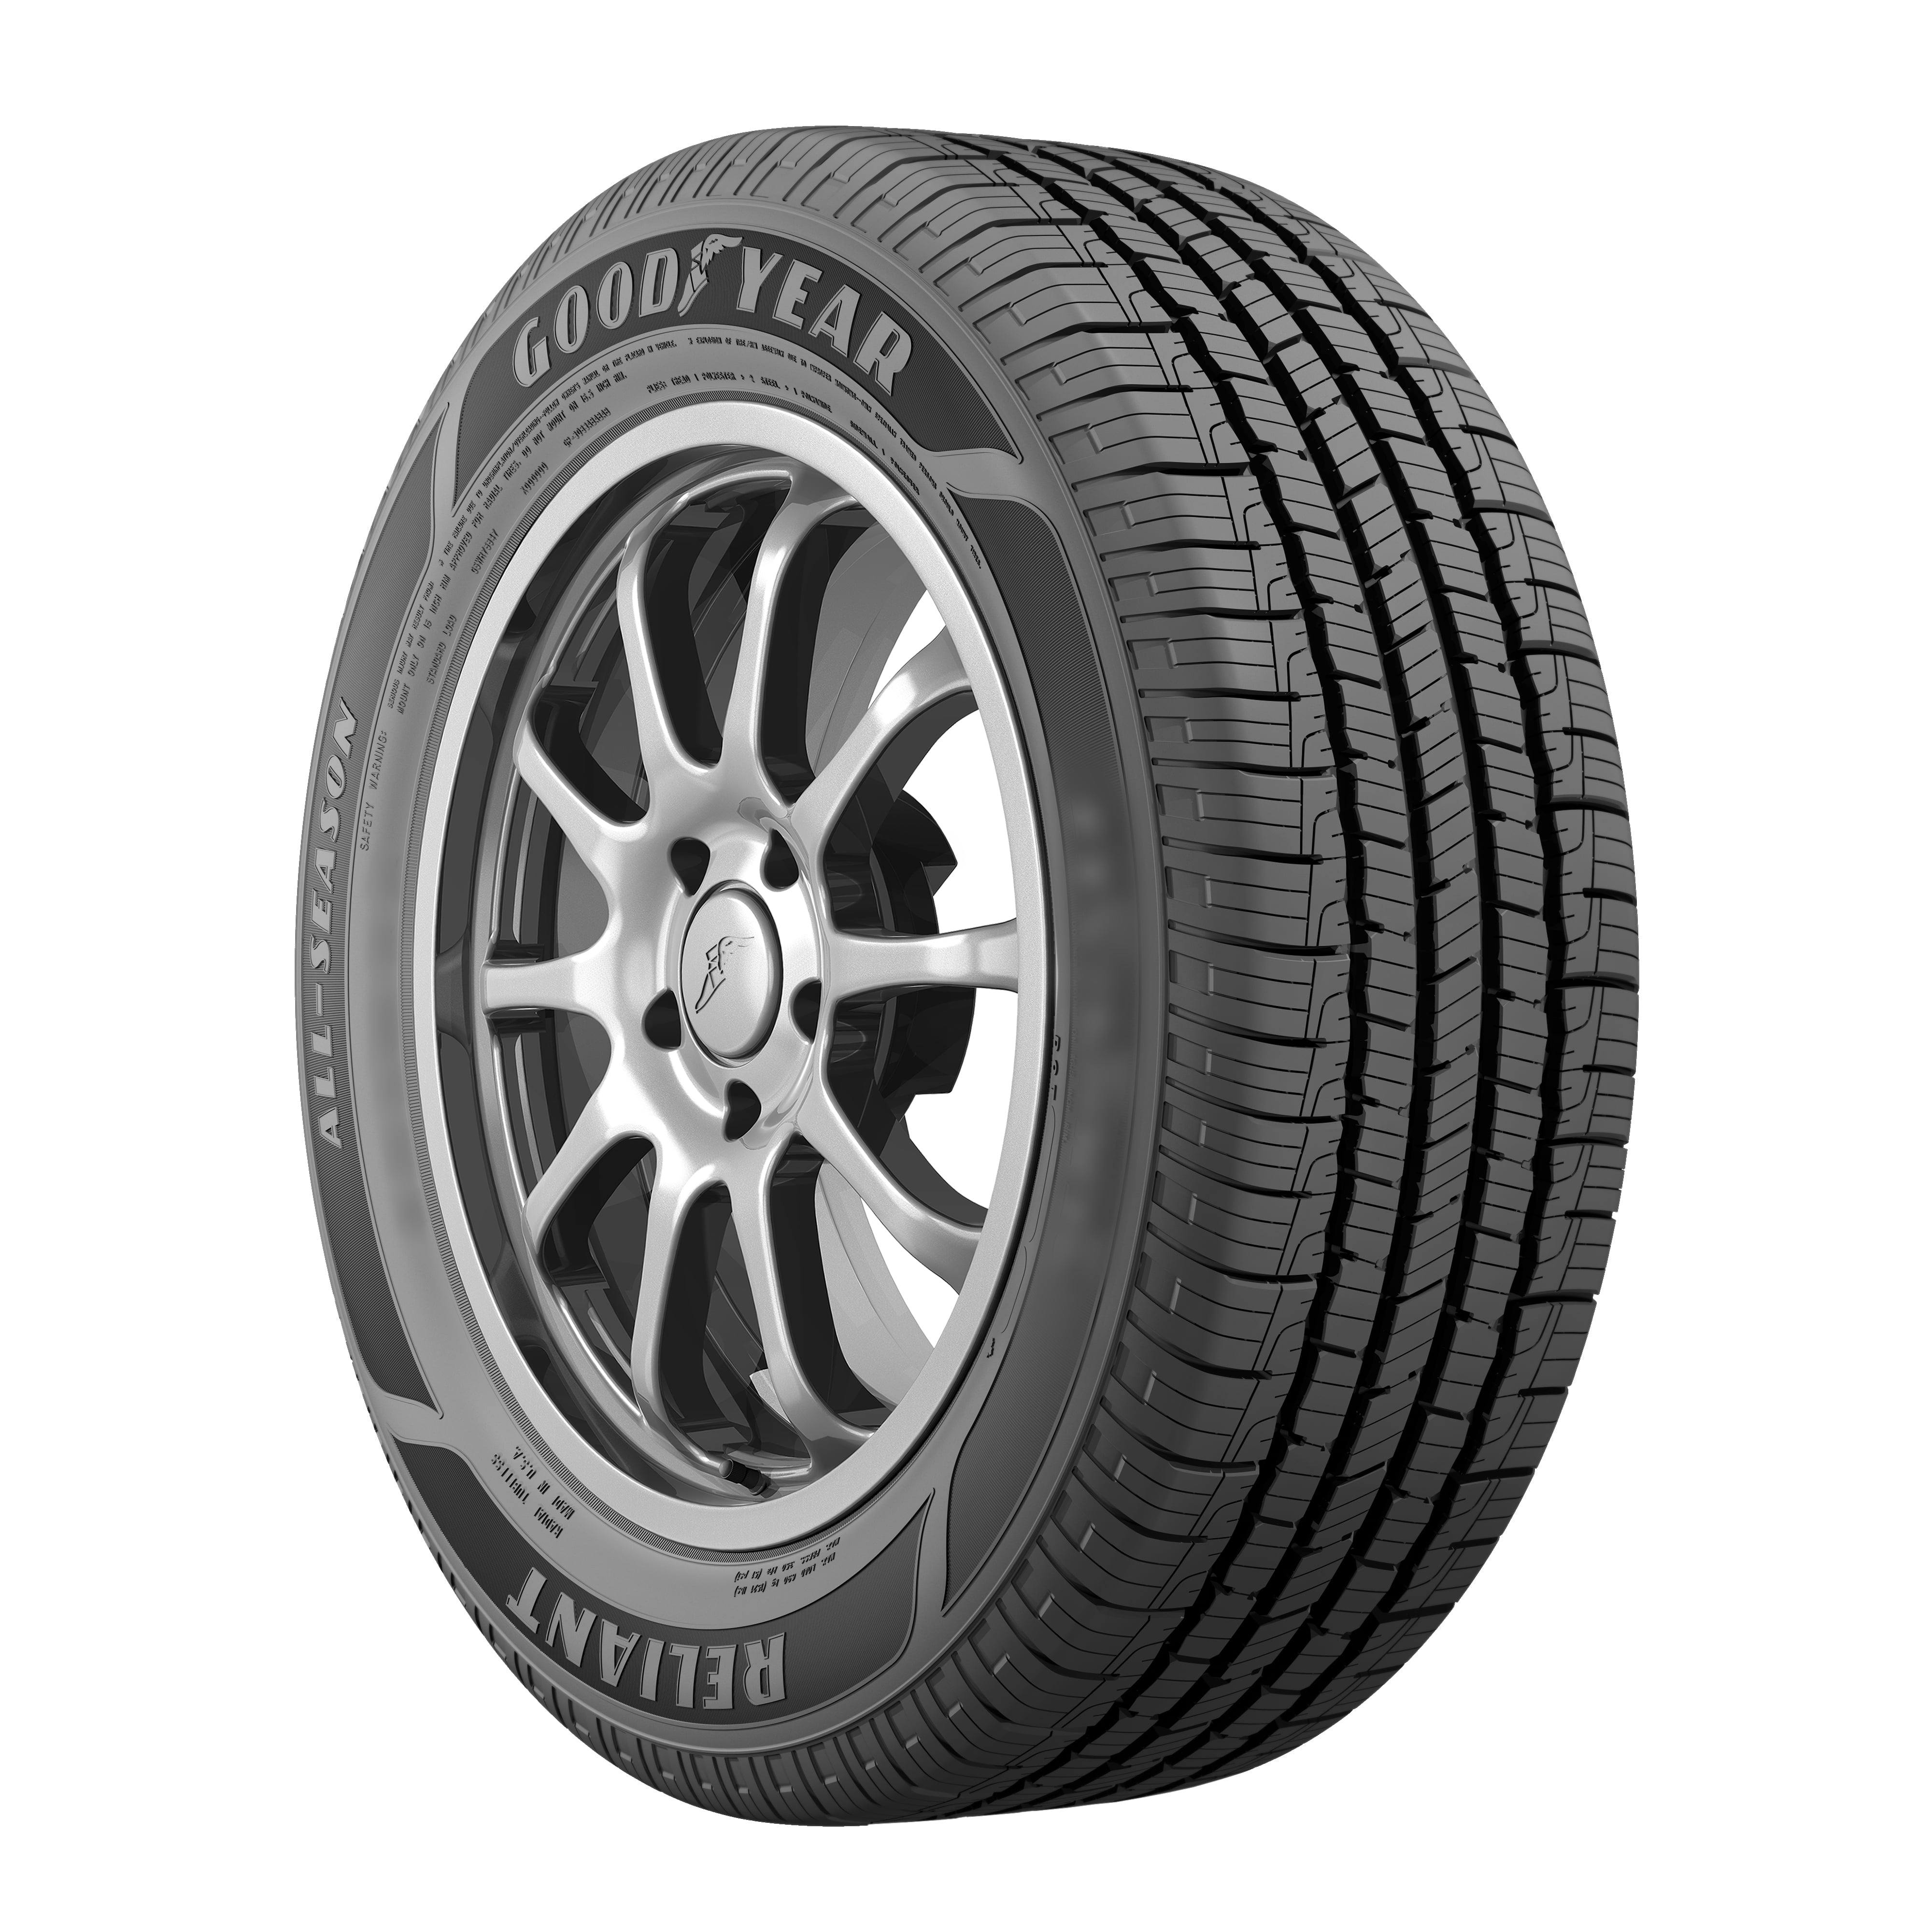 Goodyear Reliant All-Season 235/65R18 106V All-Season Tire